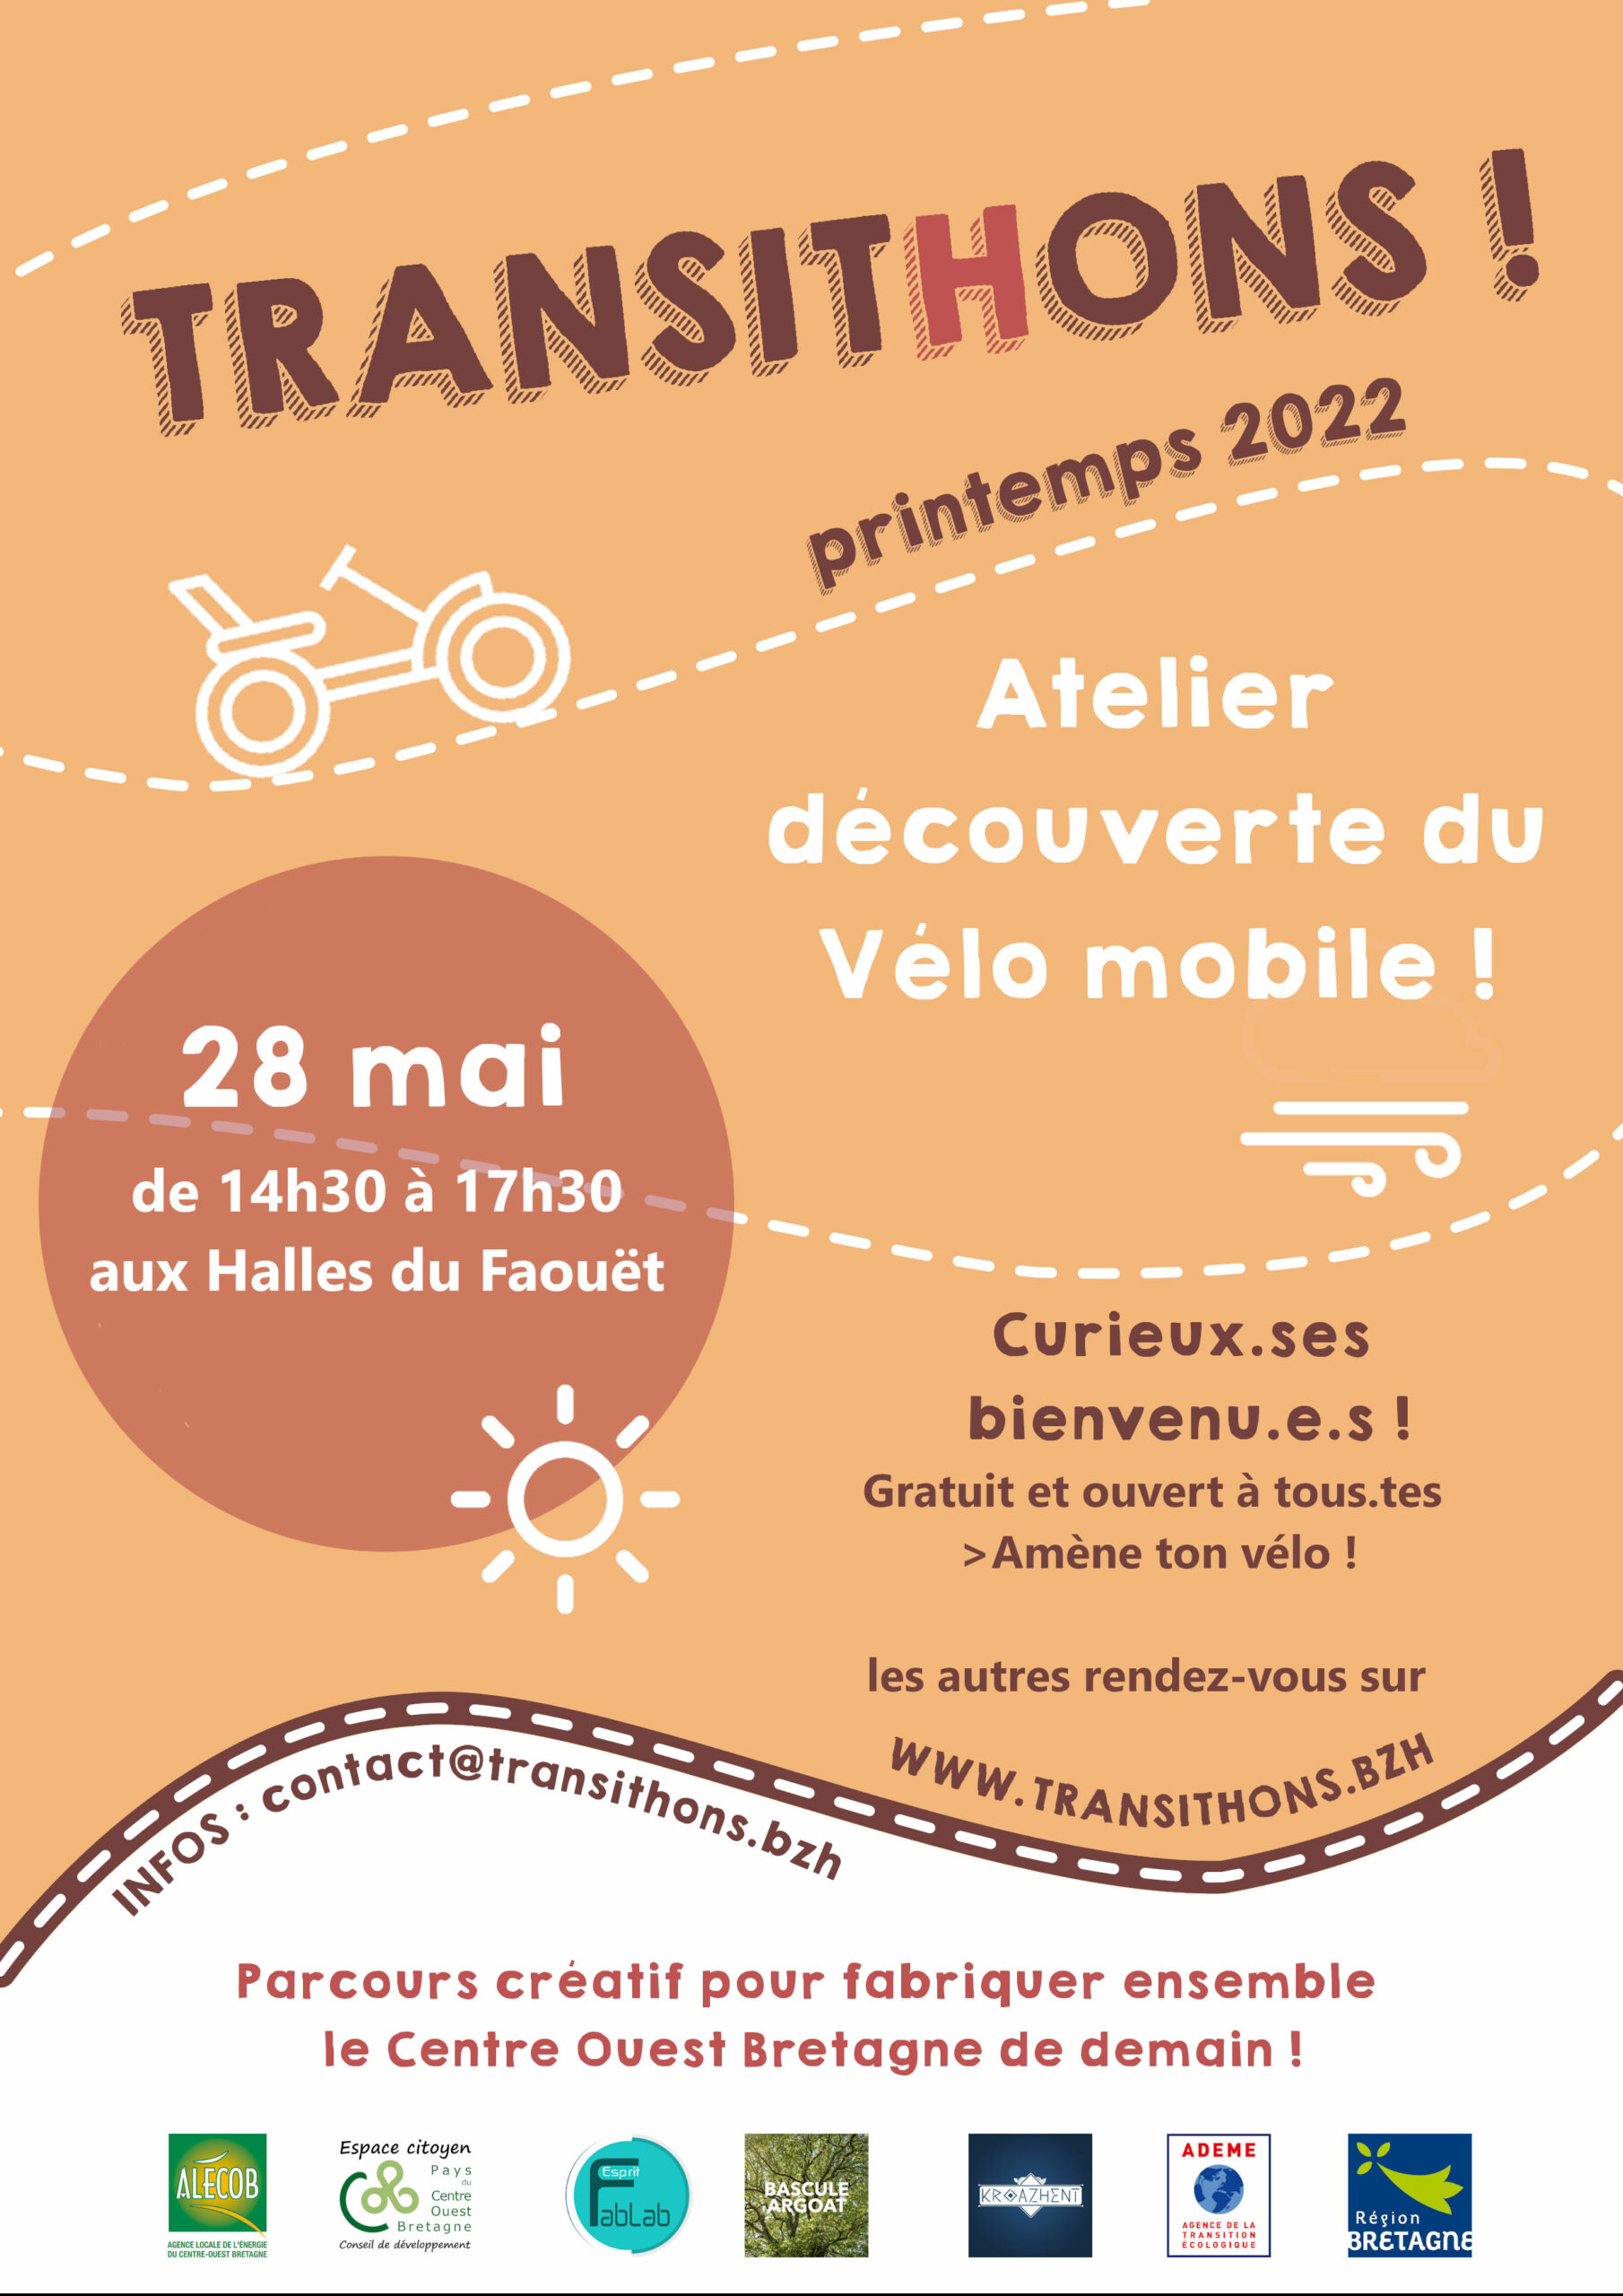 TRANSITHONS printemps 2022 !